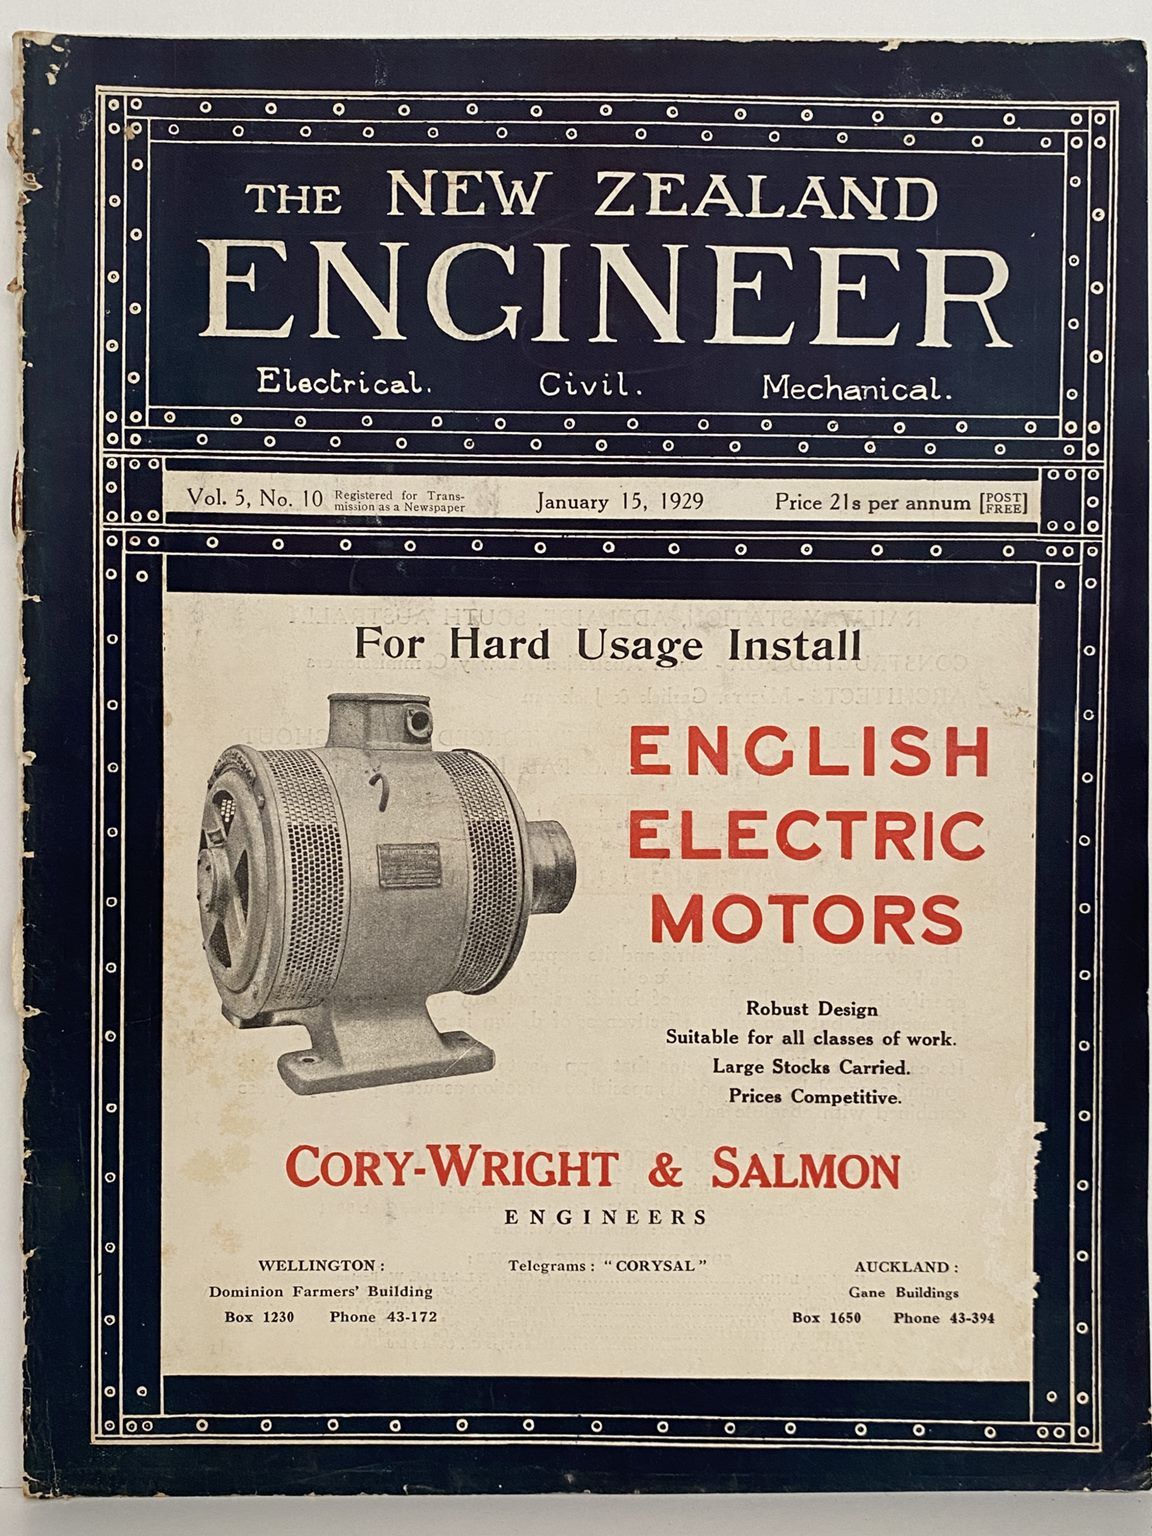 OLD MAGAZINE: The New Zealand Engineer Vol. 5, No. 10 - 15 January 1929